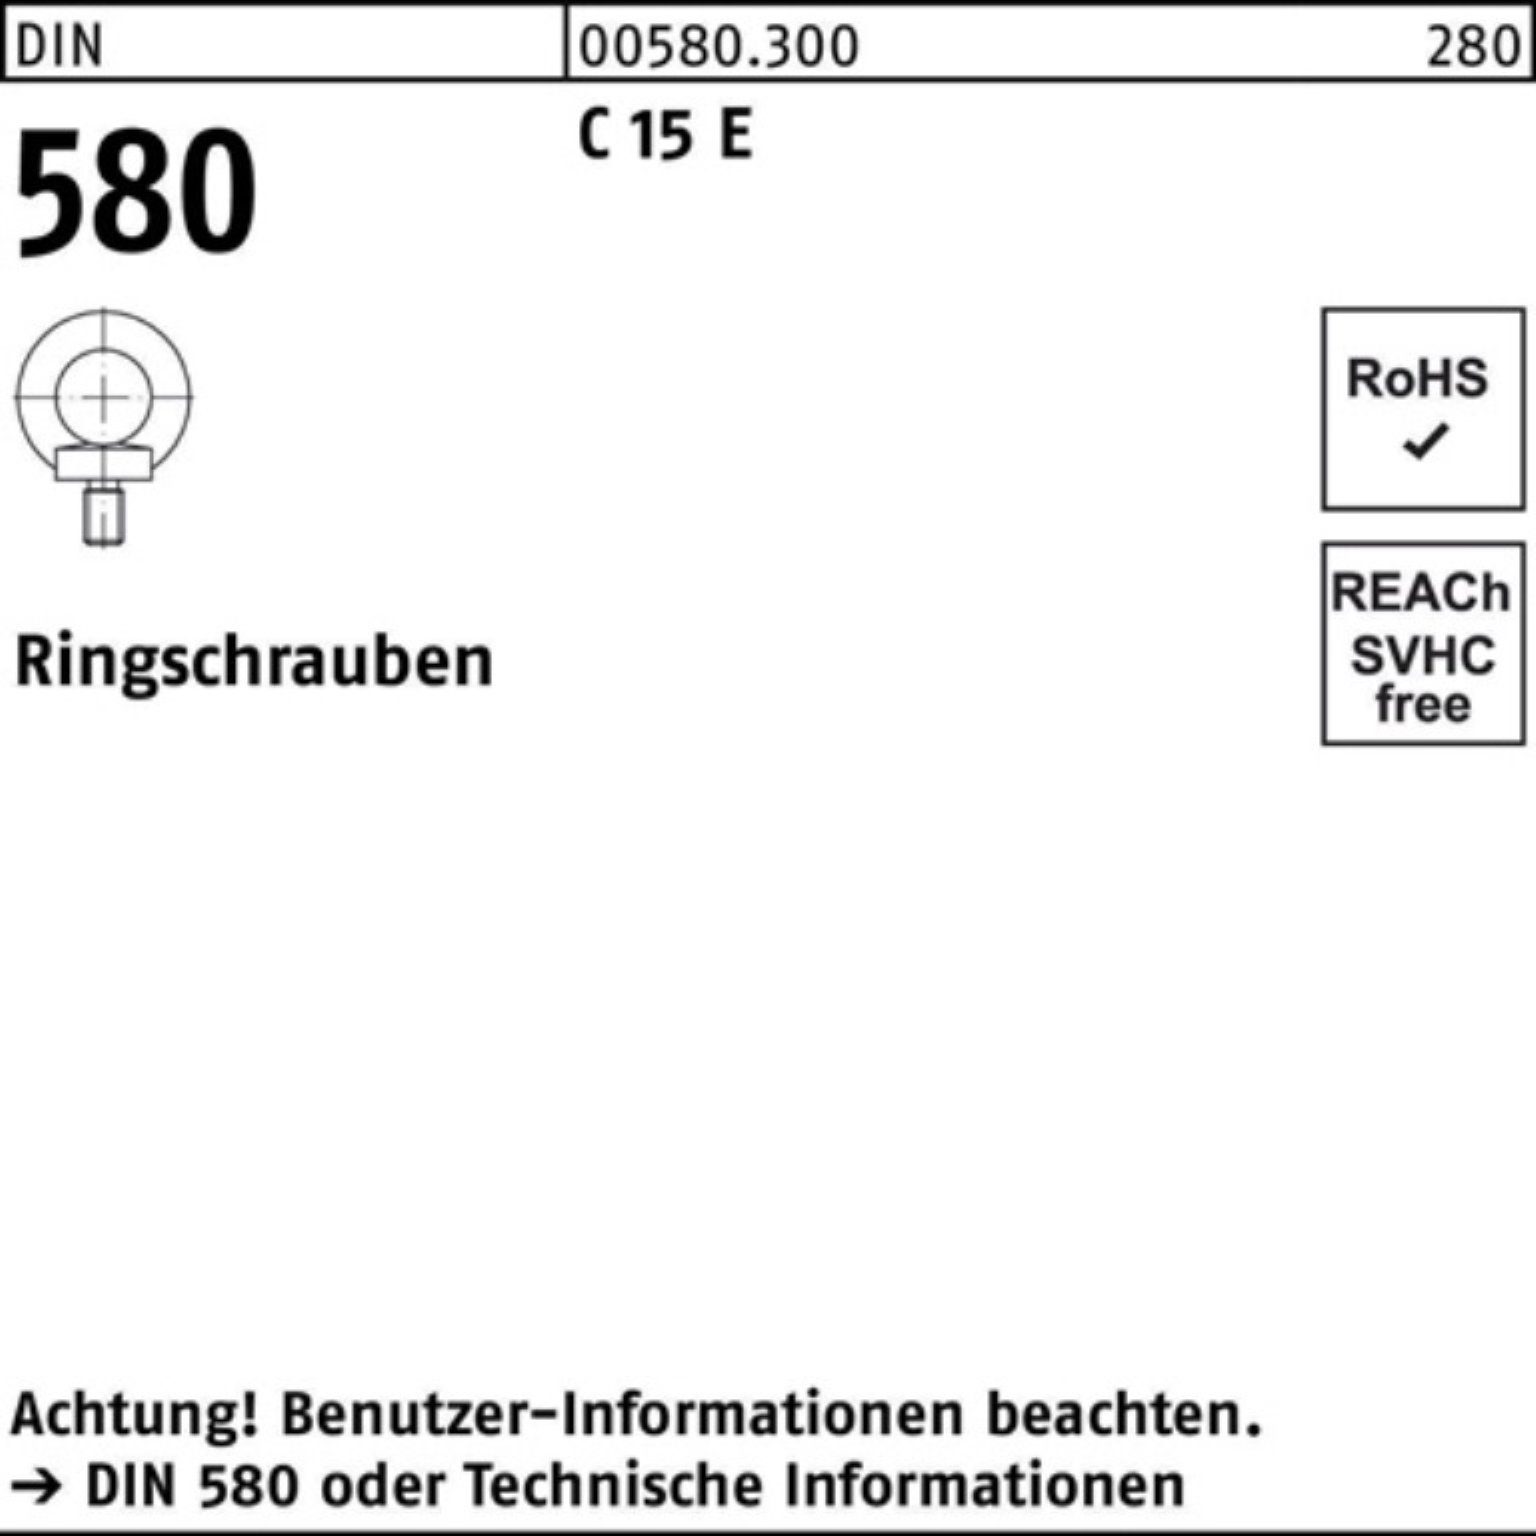 Reyher Schraube 100er Pack Ringschraube DIN 580 M6 C 15 E 25 Stück DIN 580 C 15 E Rin